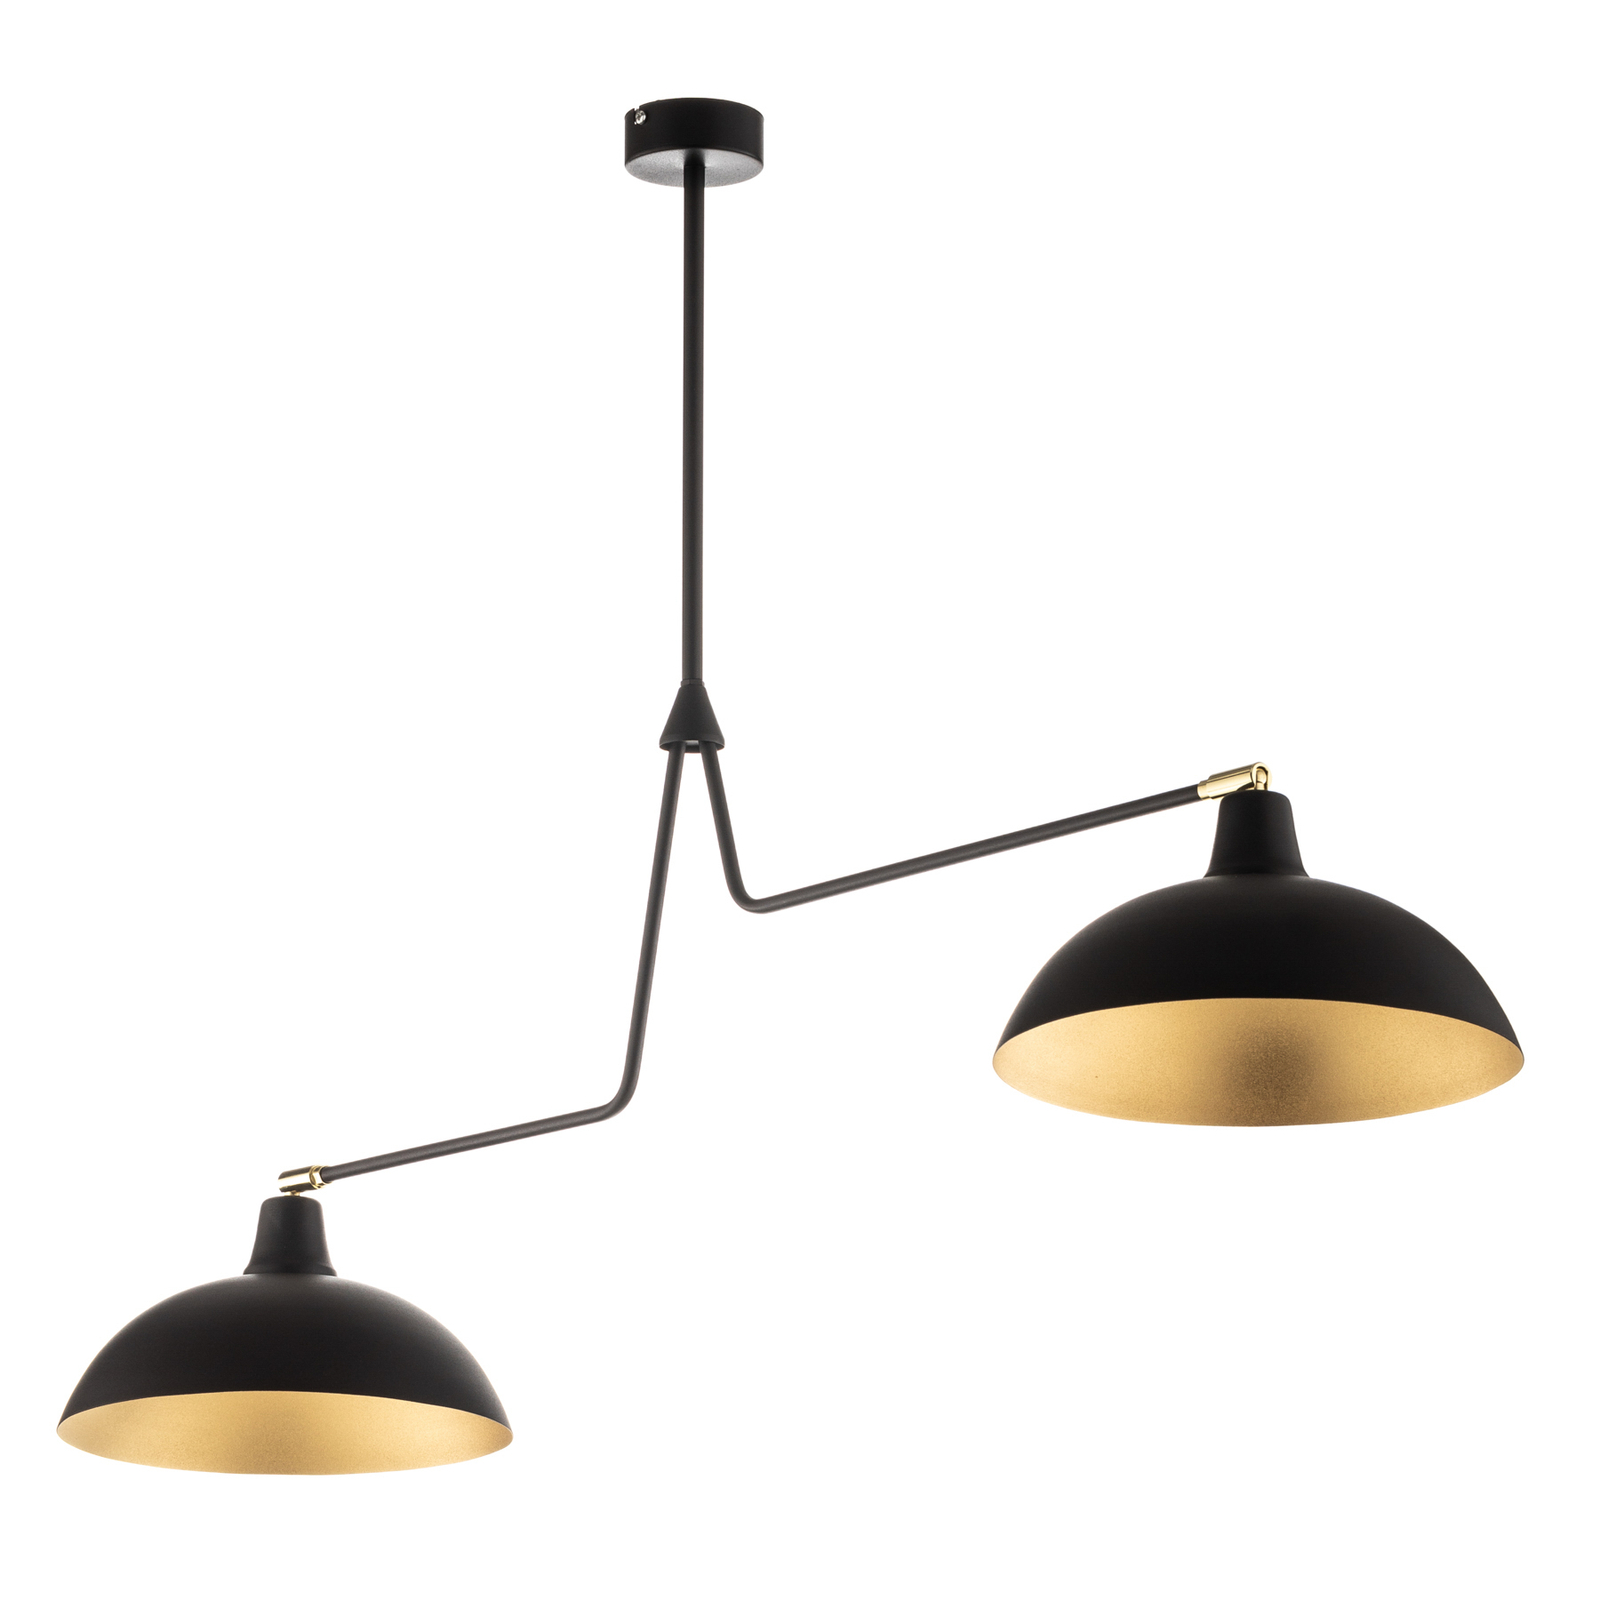 Hanglamp 1036, 2-lamps, zwart-goud